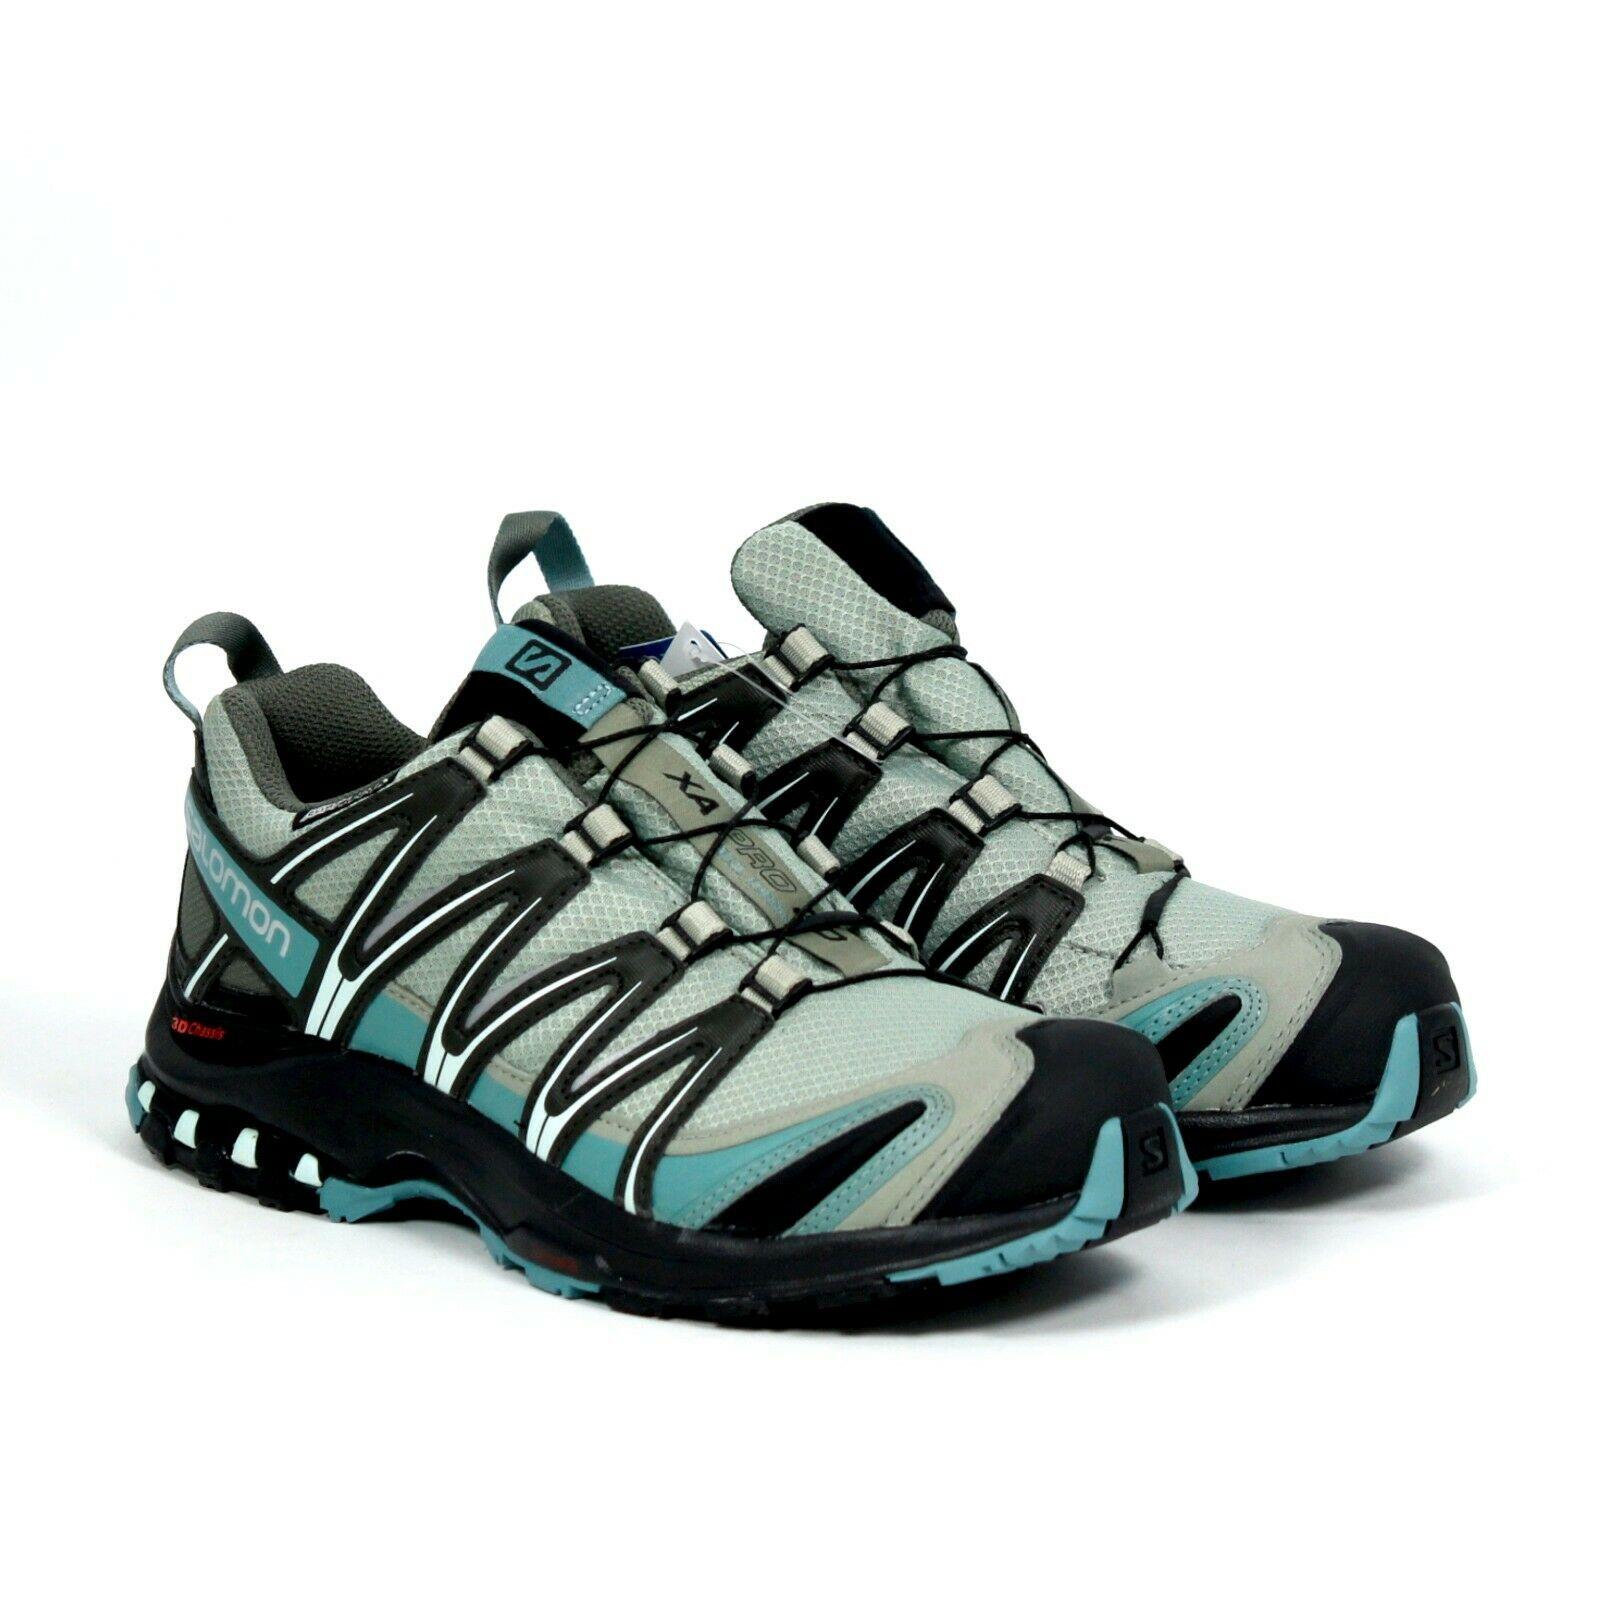 Salomon Womens XA Pro 3D Trail Running Low Top Shoes Shadow Artic Size 6.5